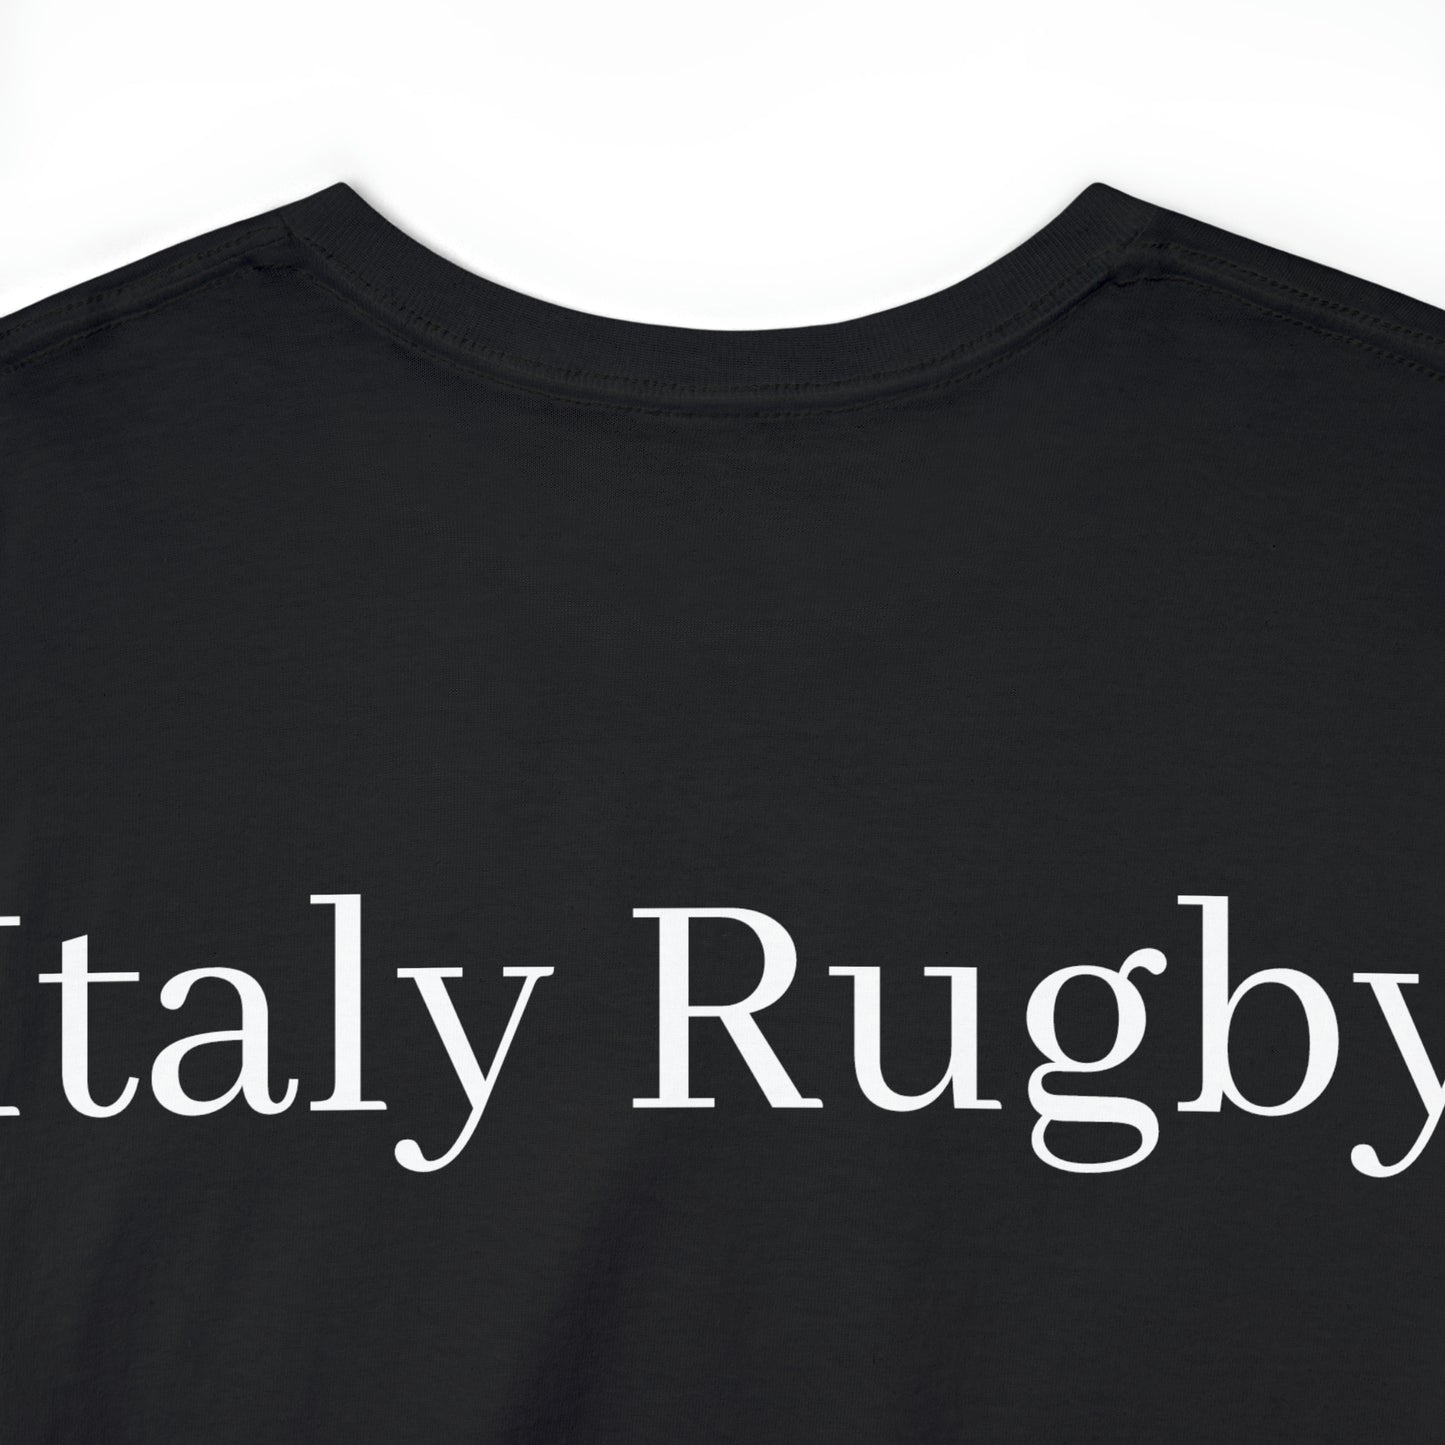 Italy Lifting the RWC - dark shirts